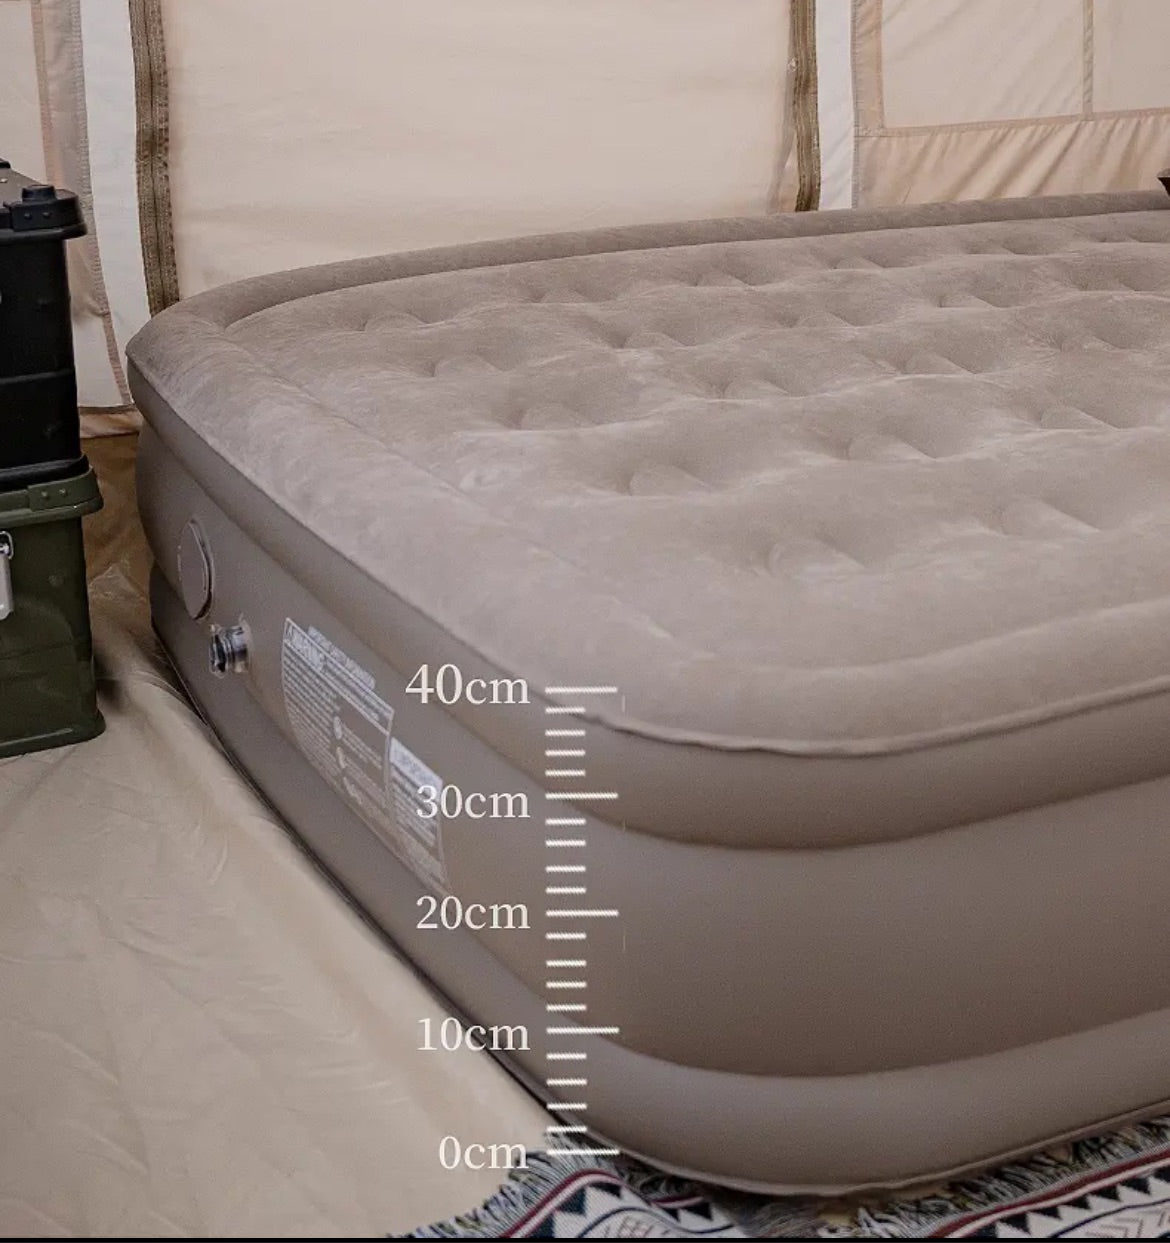 Outdoor tent air mattress with raised air mattress